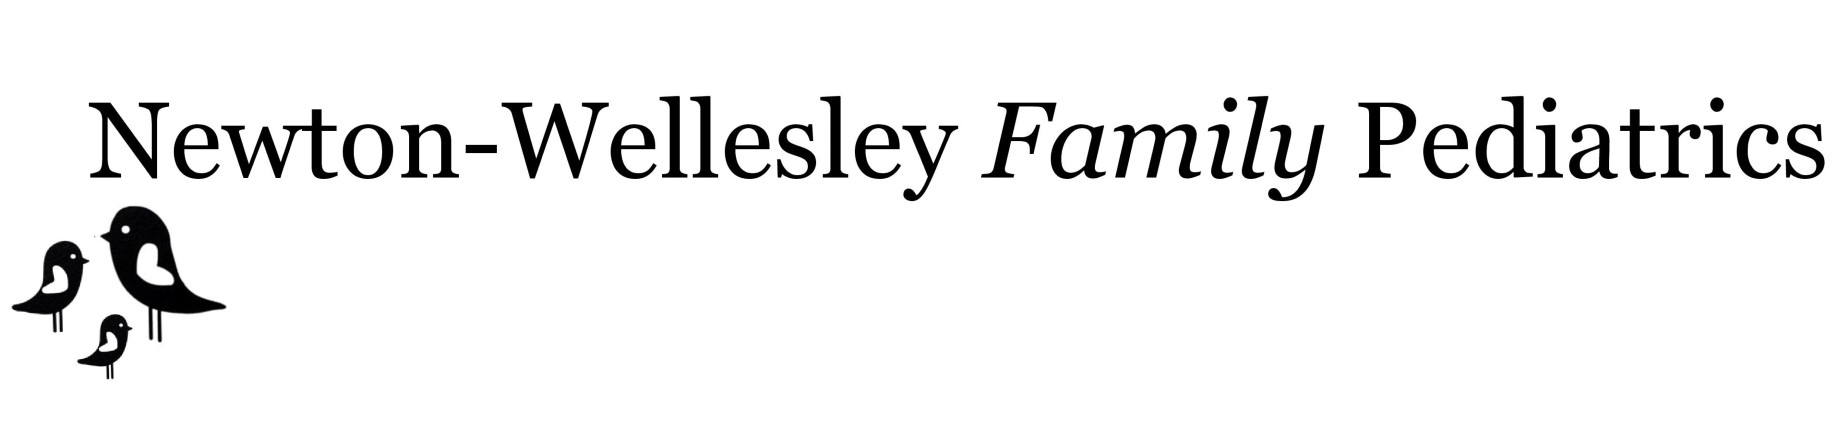 newton wellesley family pediatrics logo